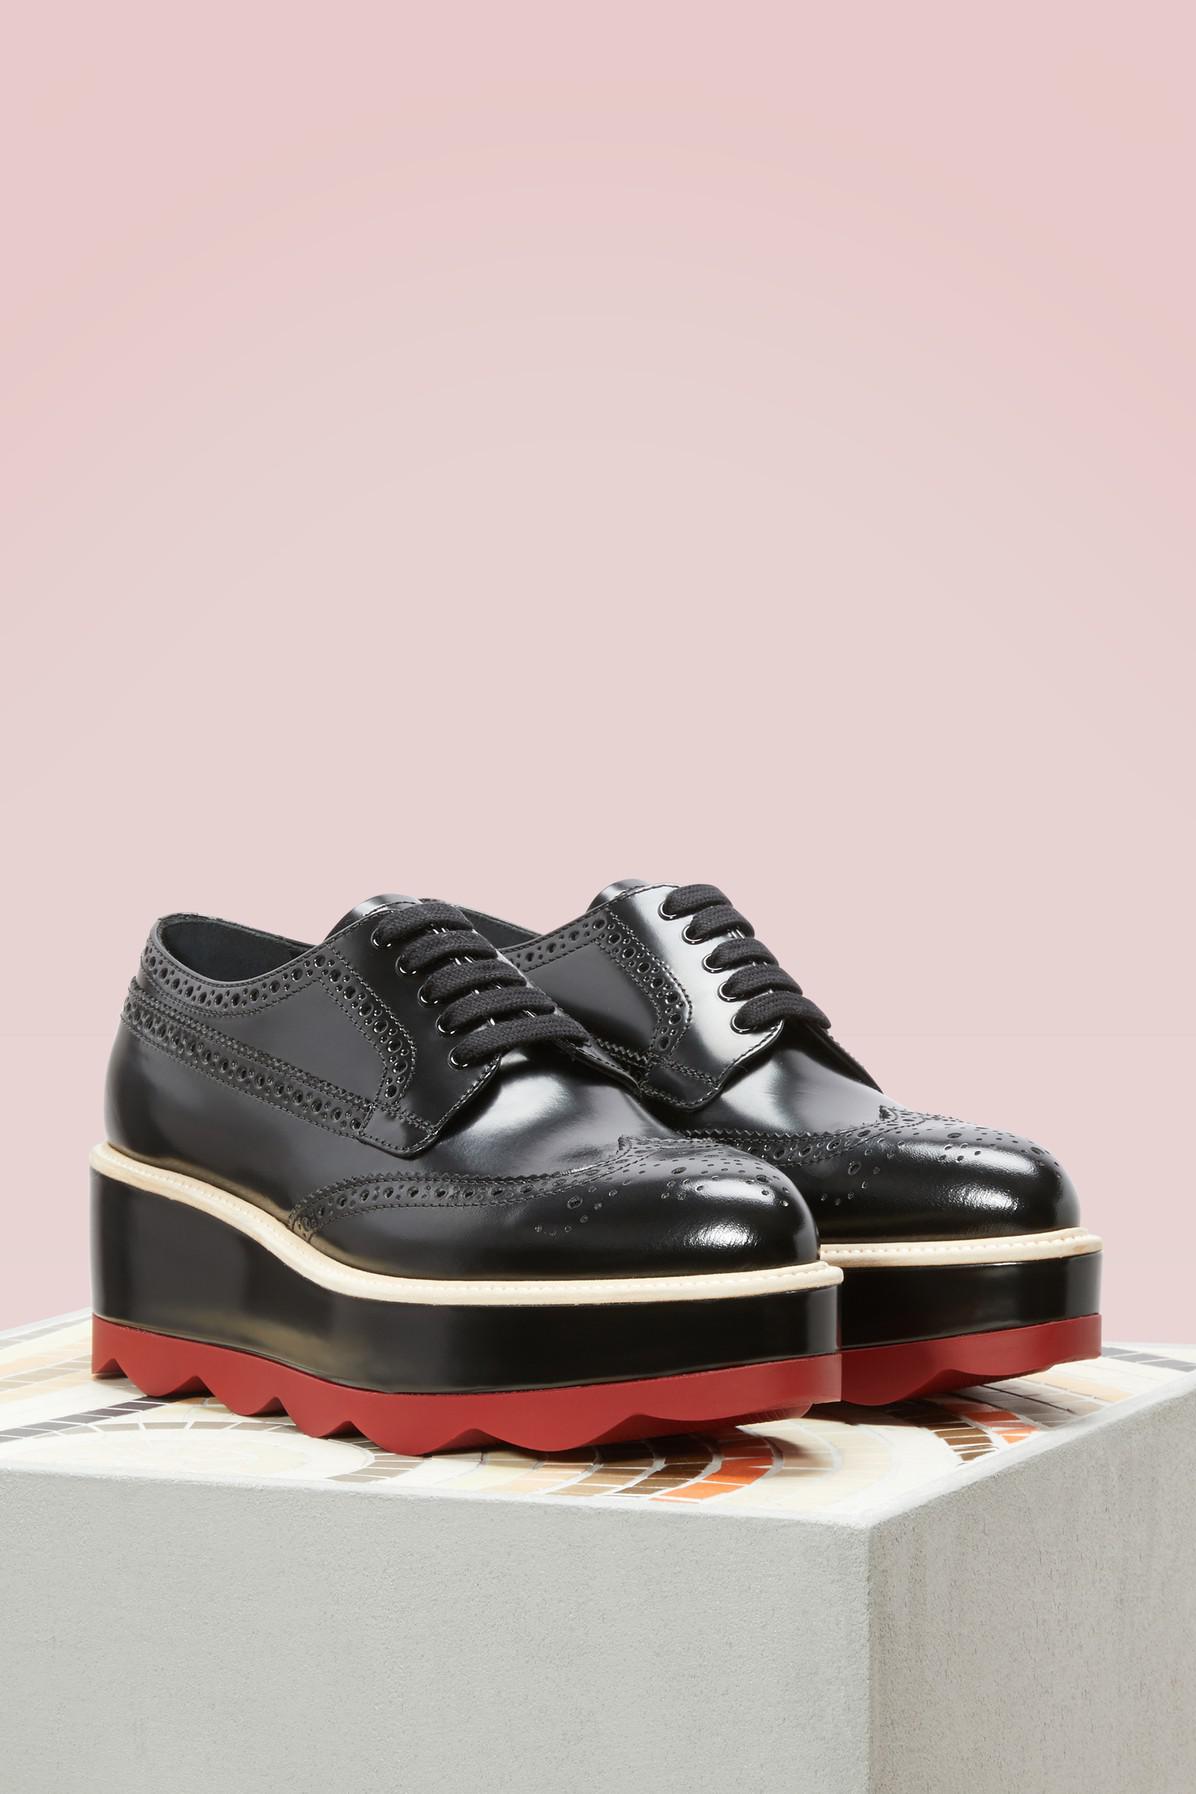 Introducir 111+ imagen black and red prada shoes - Viaterra.mx